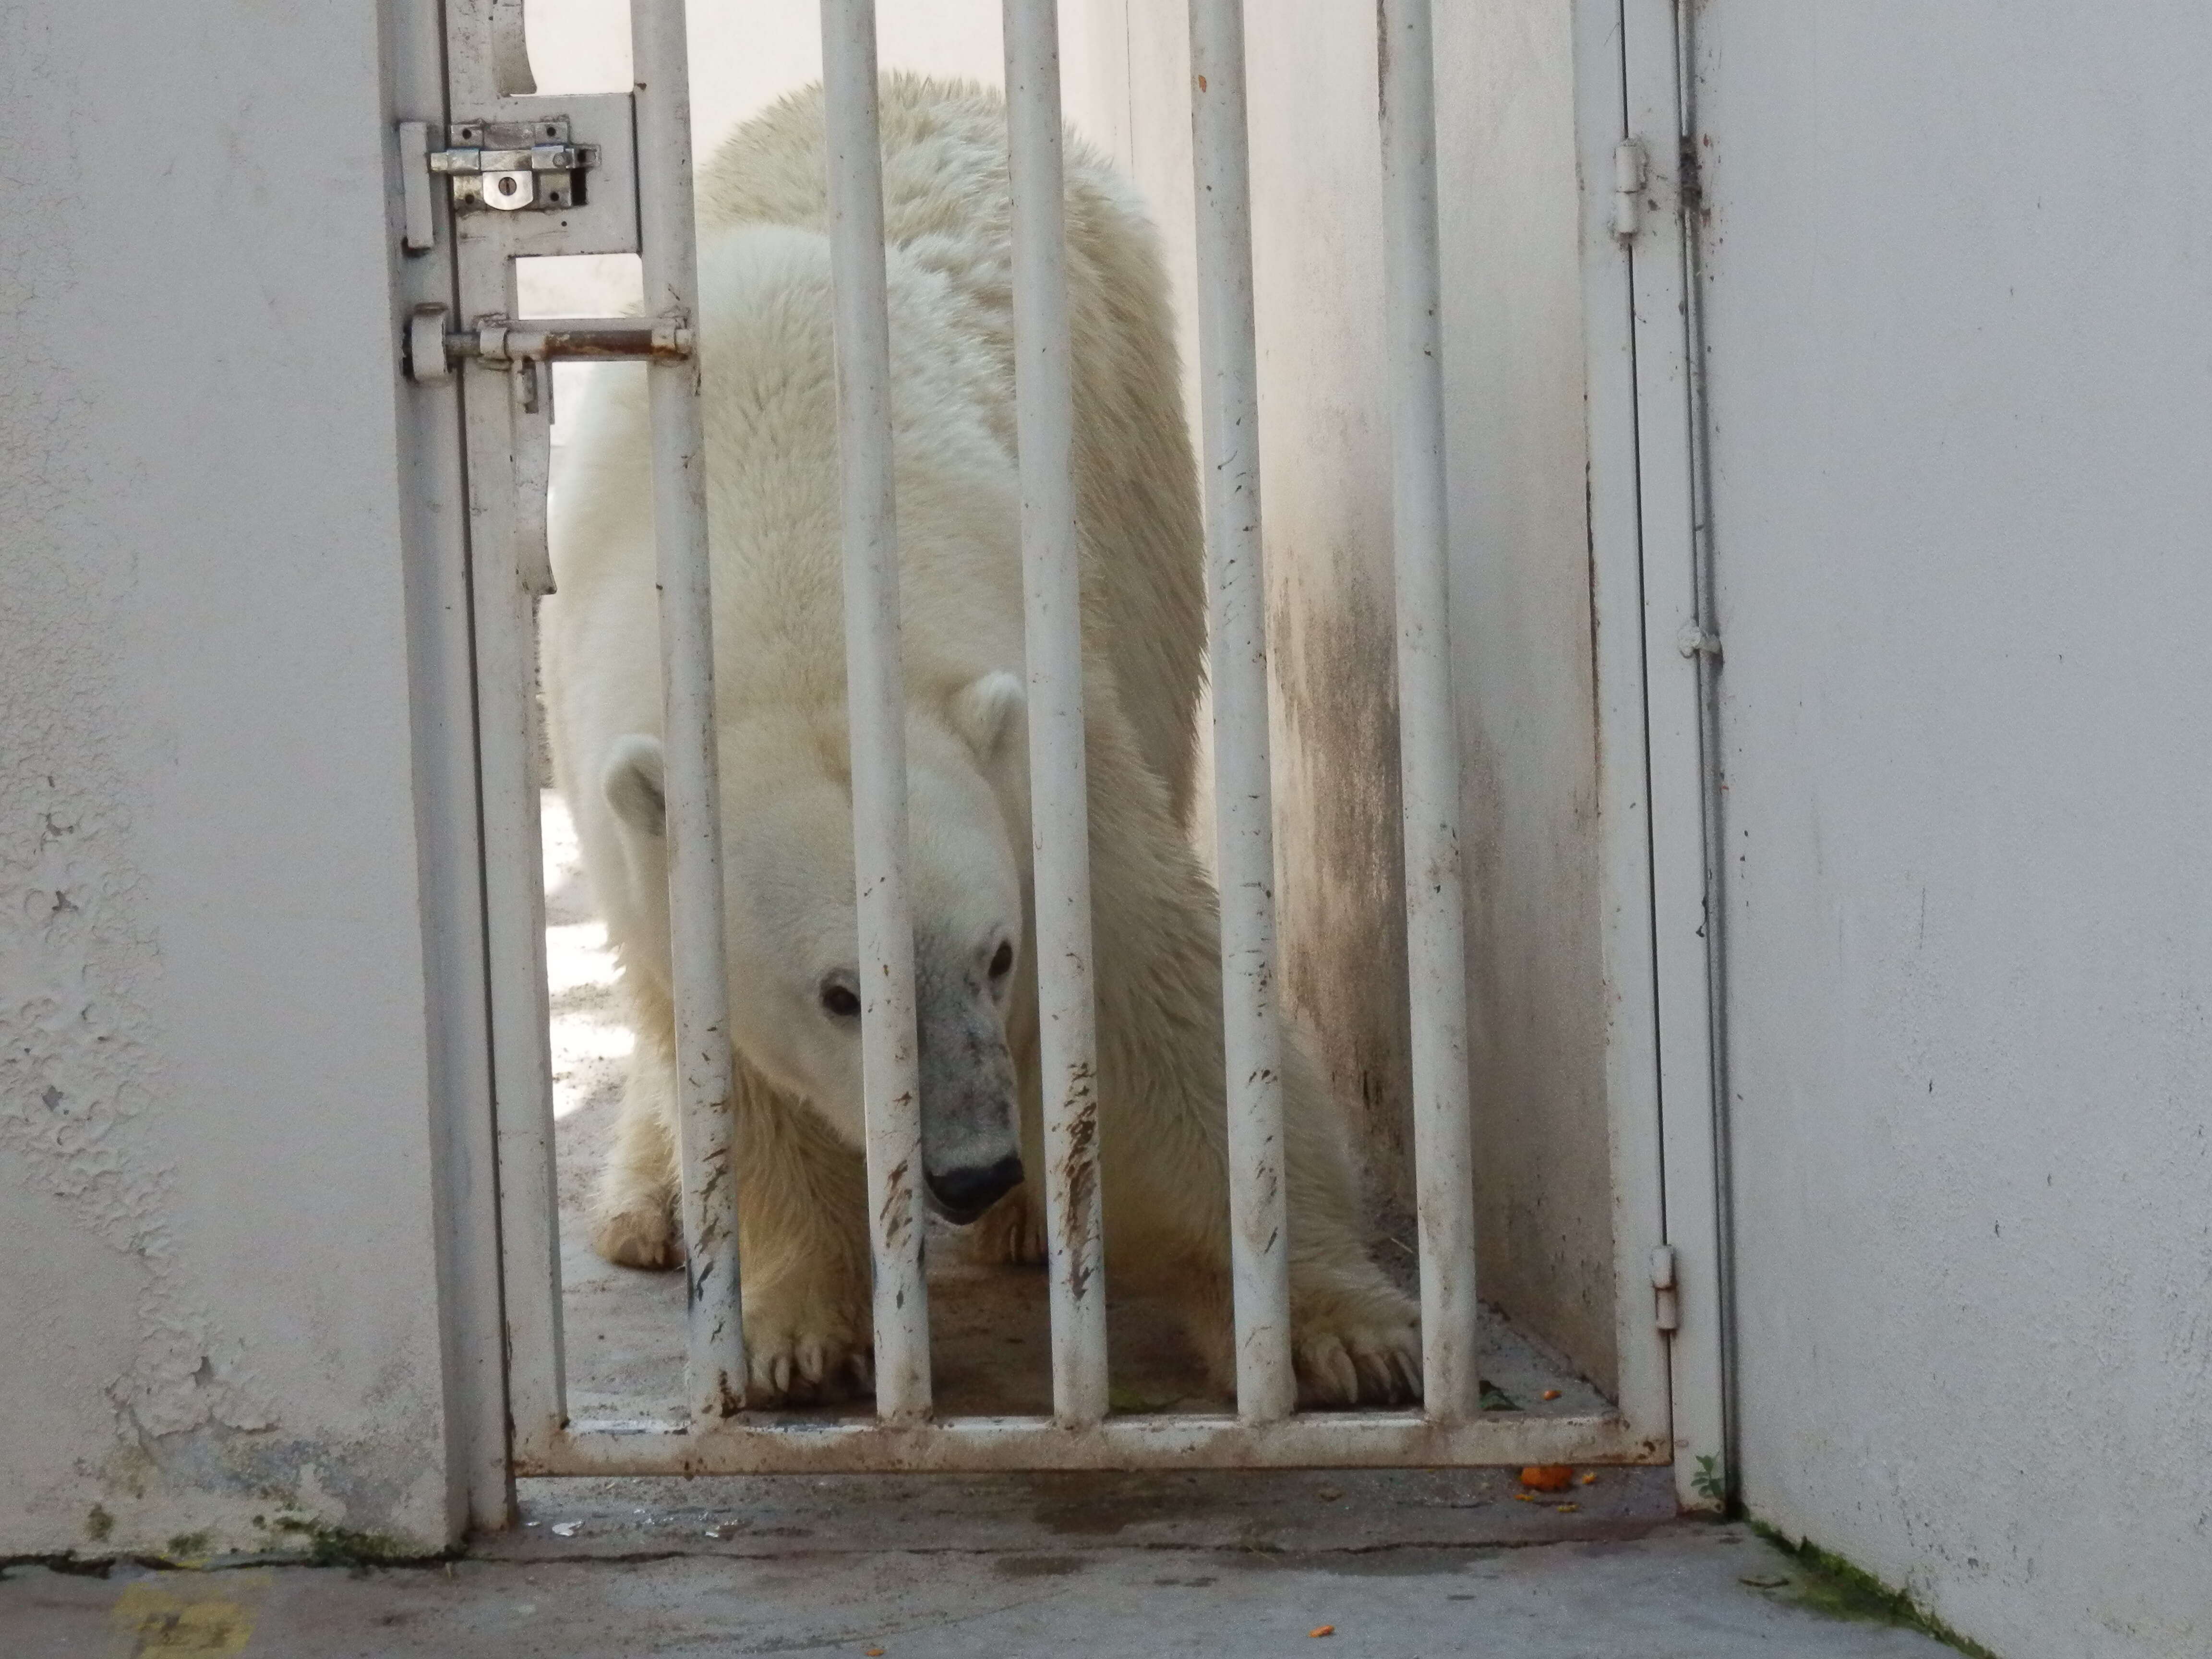 Zoo polar bear behind bars